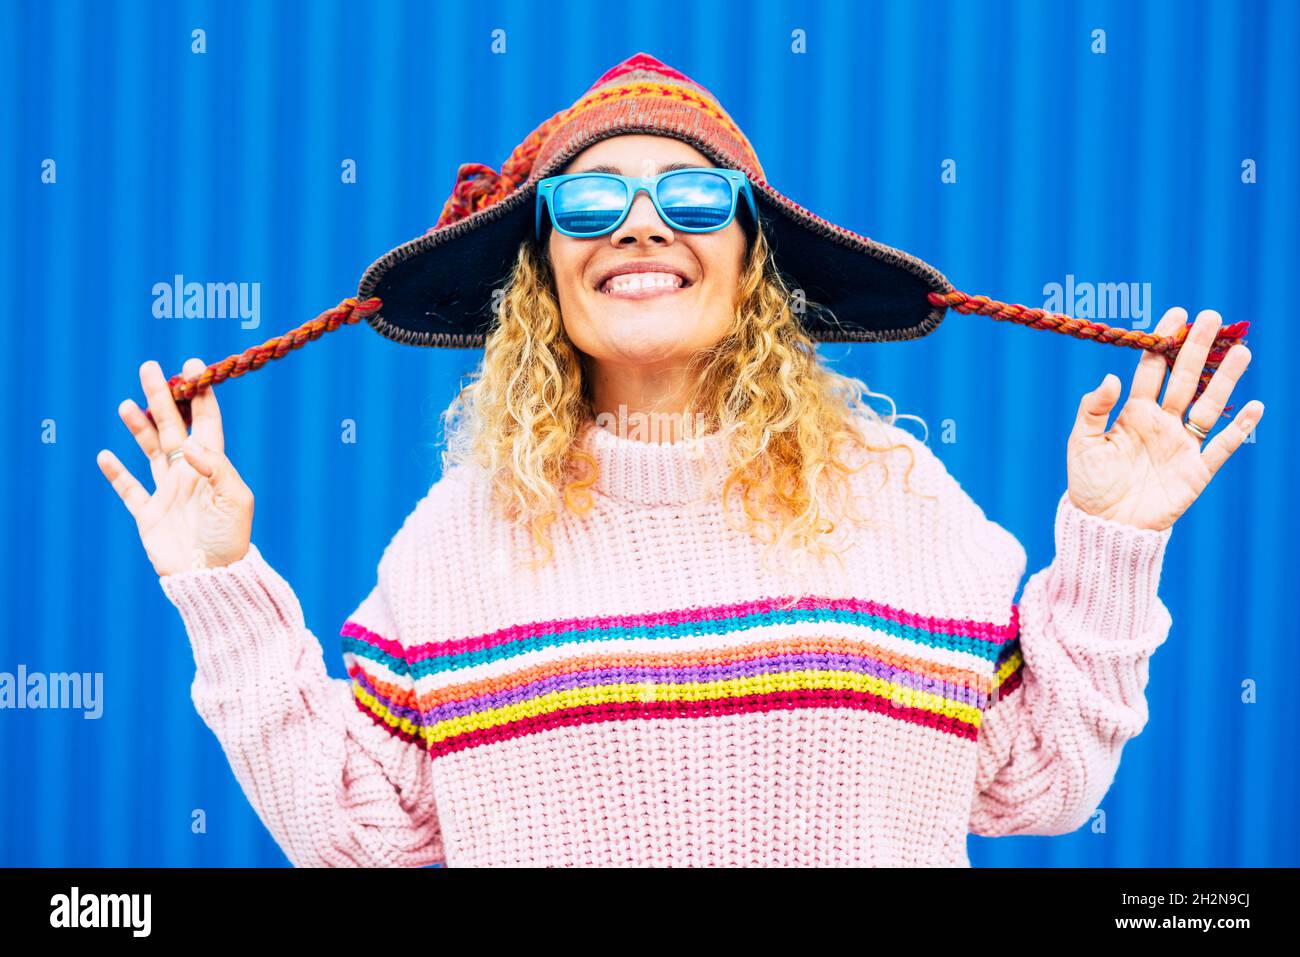 Cheerful mature woman wearing knit hat and sunglasses Stock Photo